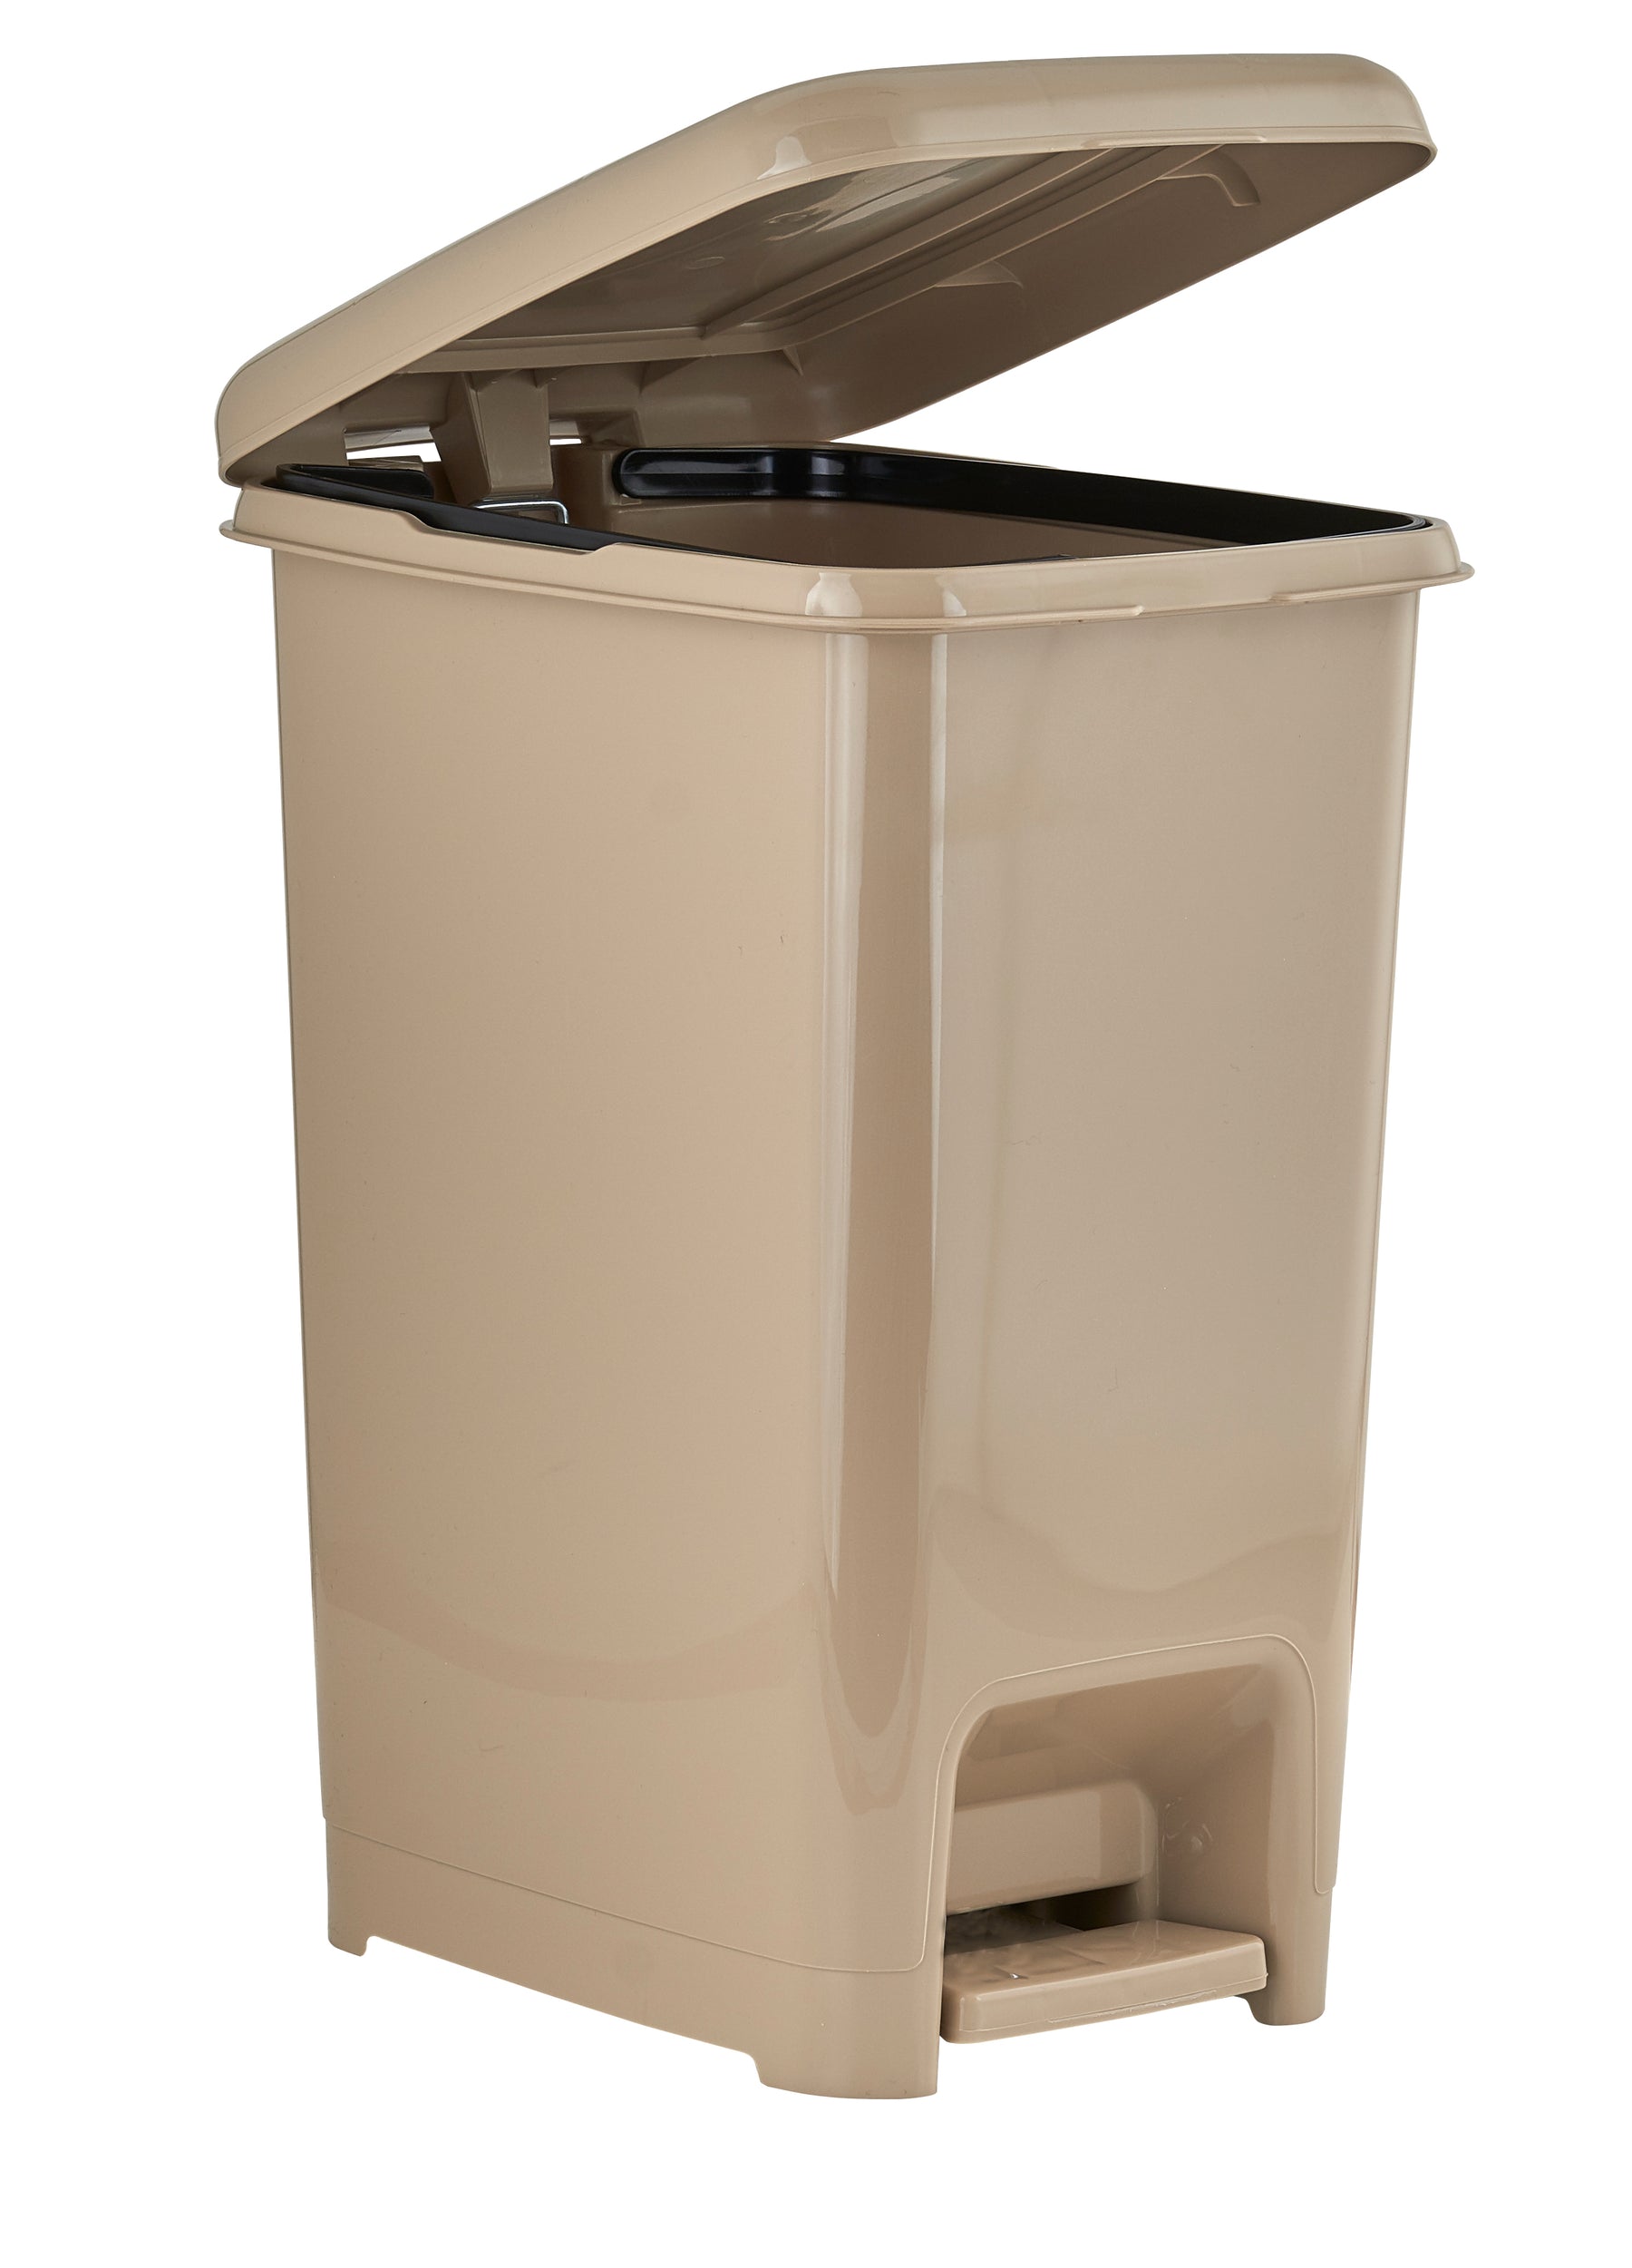 Superio Slim Pedal Trash Can, 64 Qt. 16 us liquid gallons(Beige) (Beige)